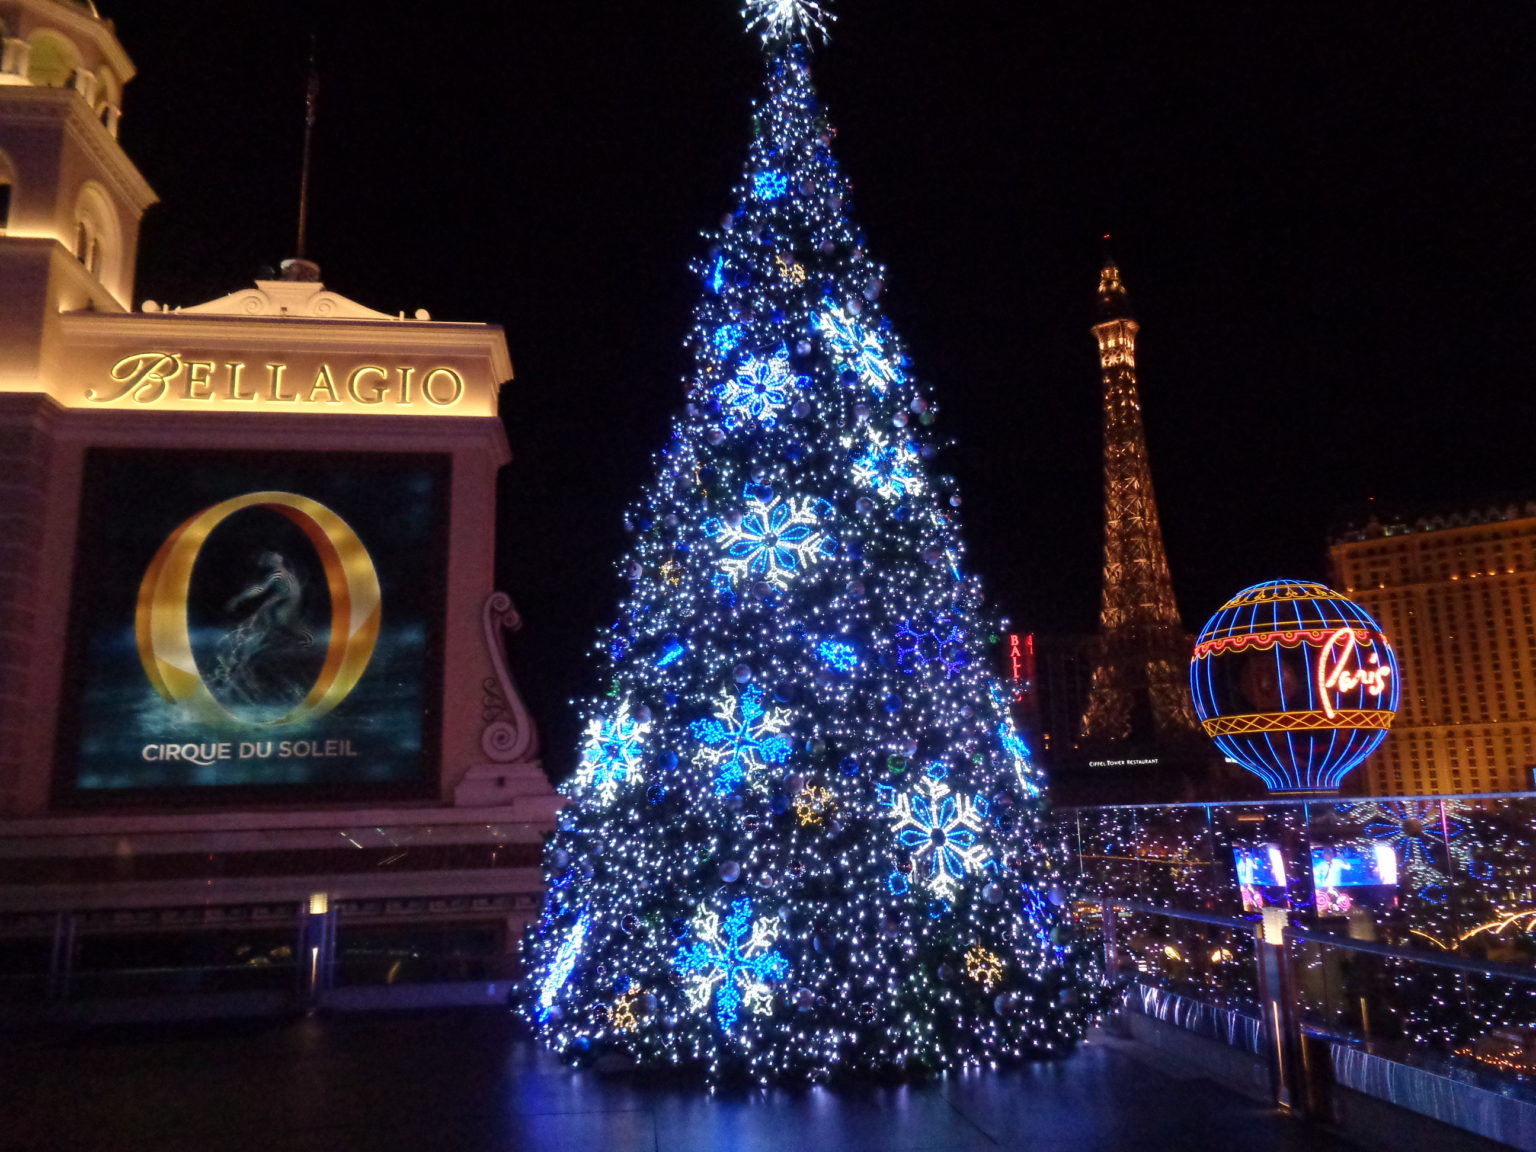 Las Vegas Hotel Casinos Christmas & Holiday Displays 2019 VegasChanges